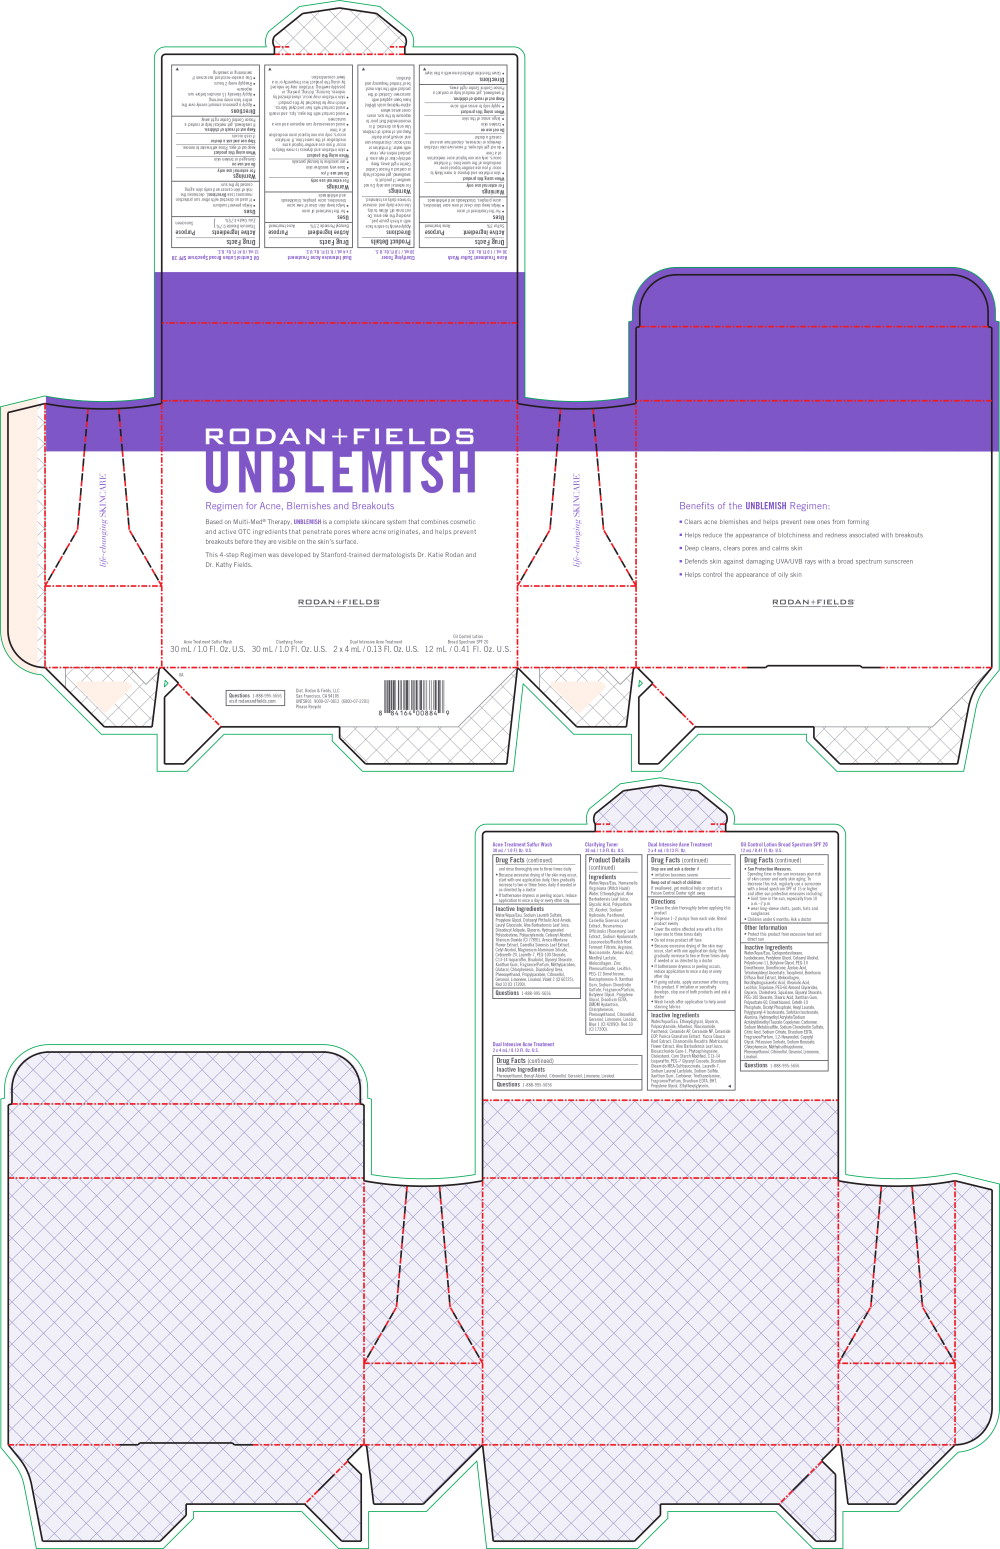 Principal display Panel - Rodan Fields Unblemish Kit Label
